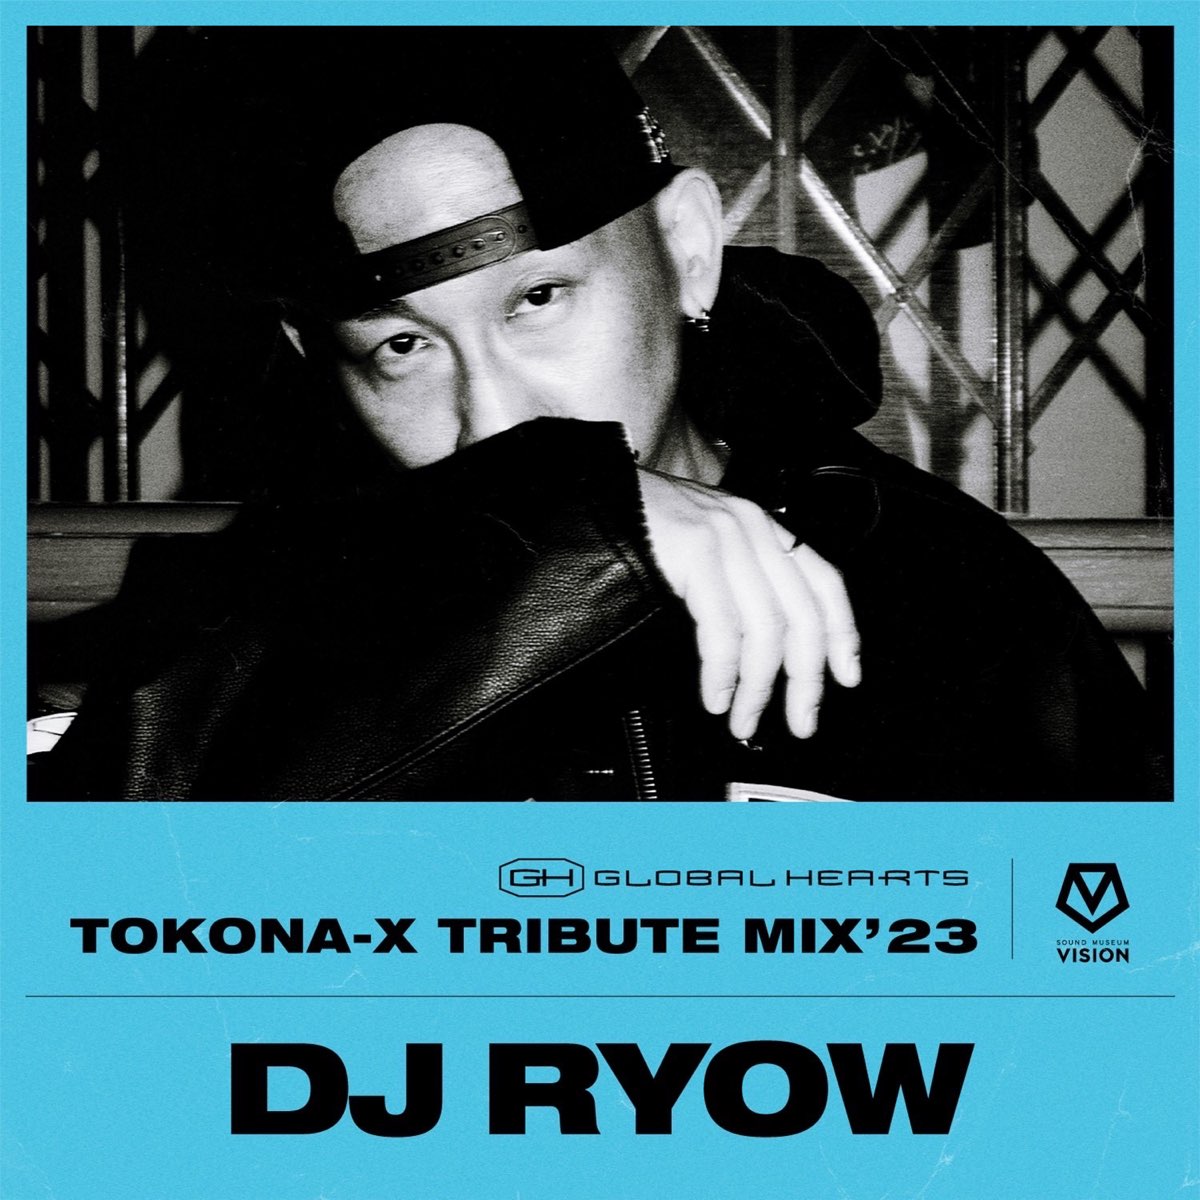 BEST OF TOKONA-X DJ RYOW - 邦楽